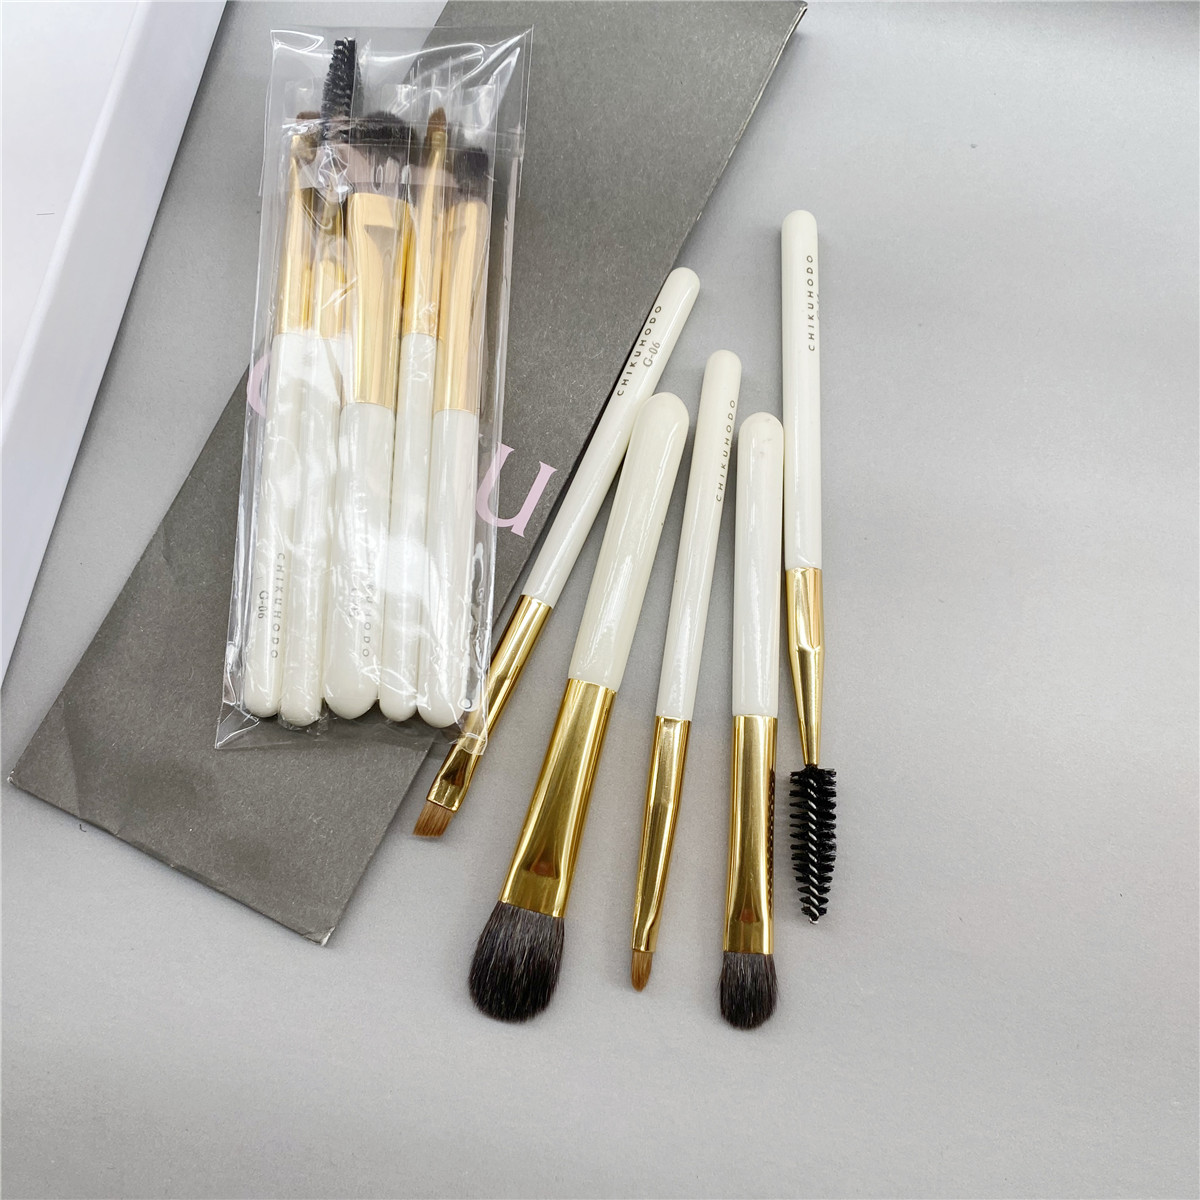 

Top Quality Japanese Makeup Brush Set - Travel Sized 5pcs (G-03 G-04 G-05 G-06 G-14) Beauty Cosmetics Tools Kit